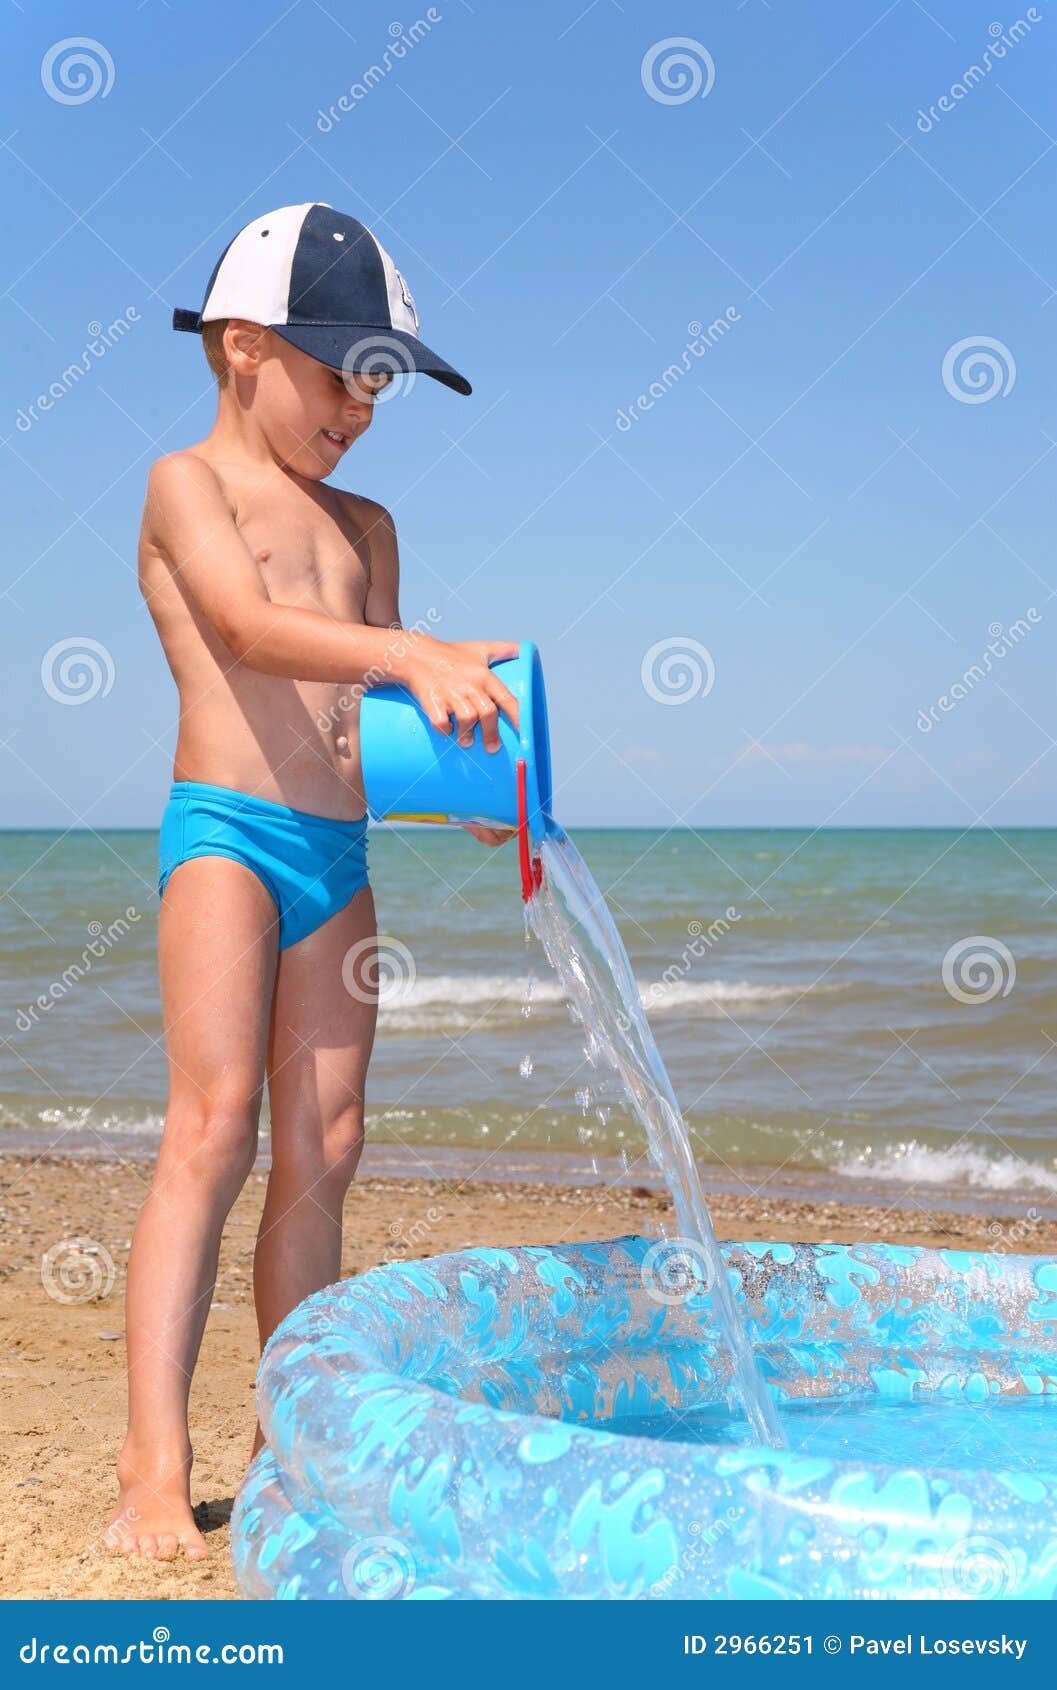 boy plays on a beach